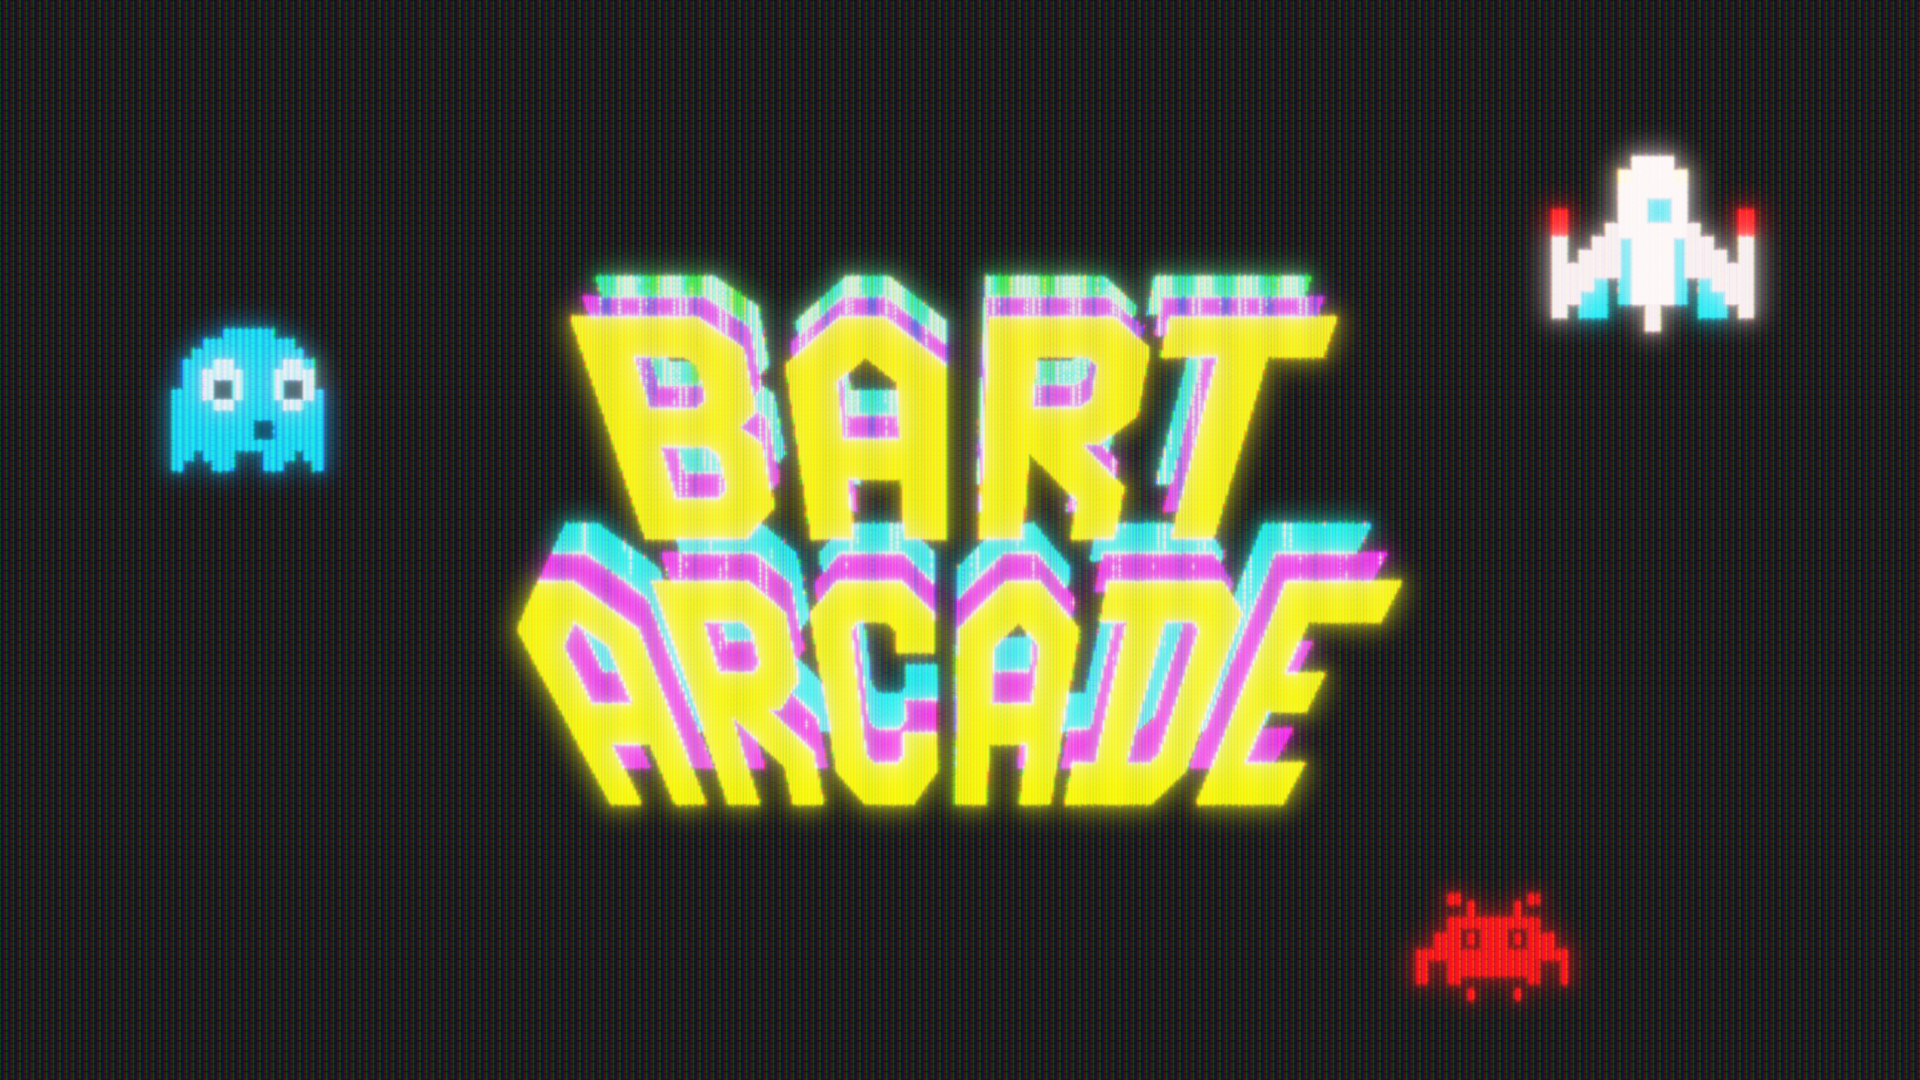 BART Arcade